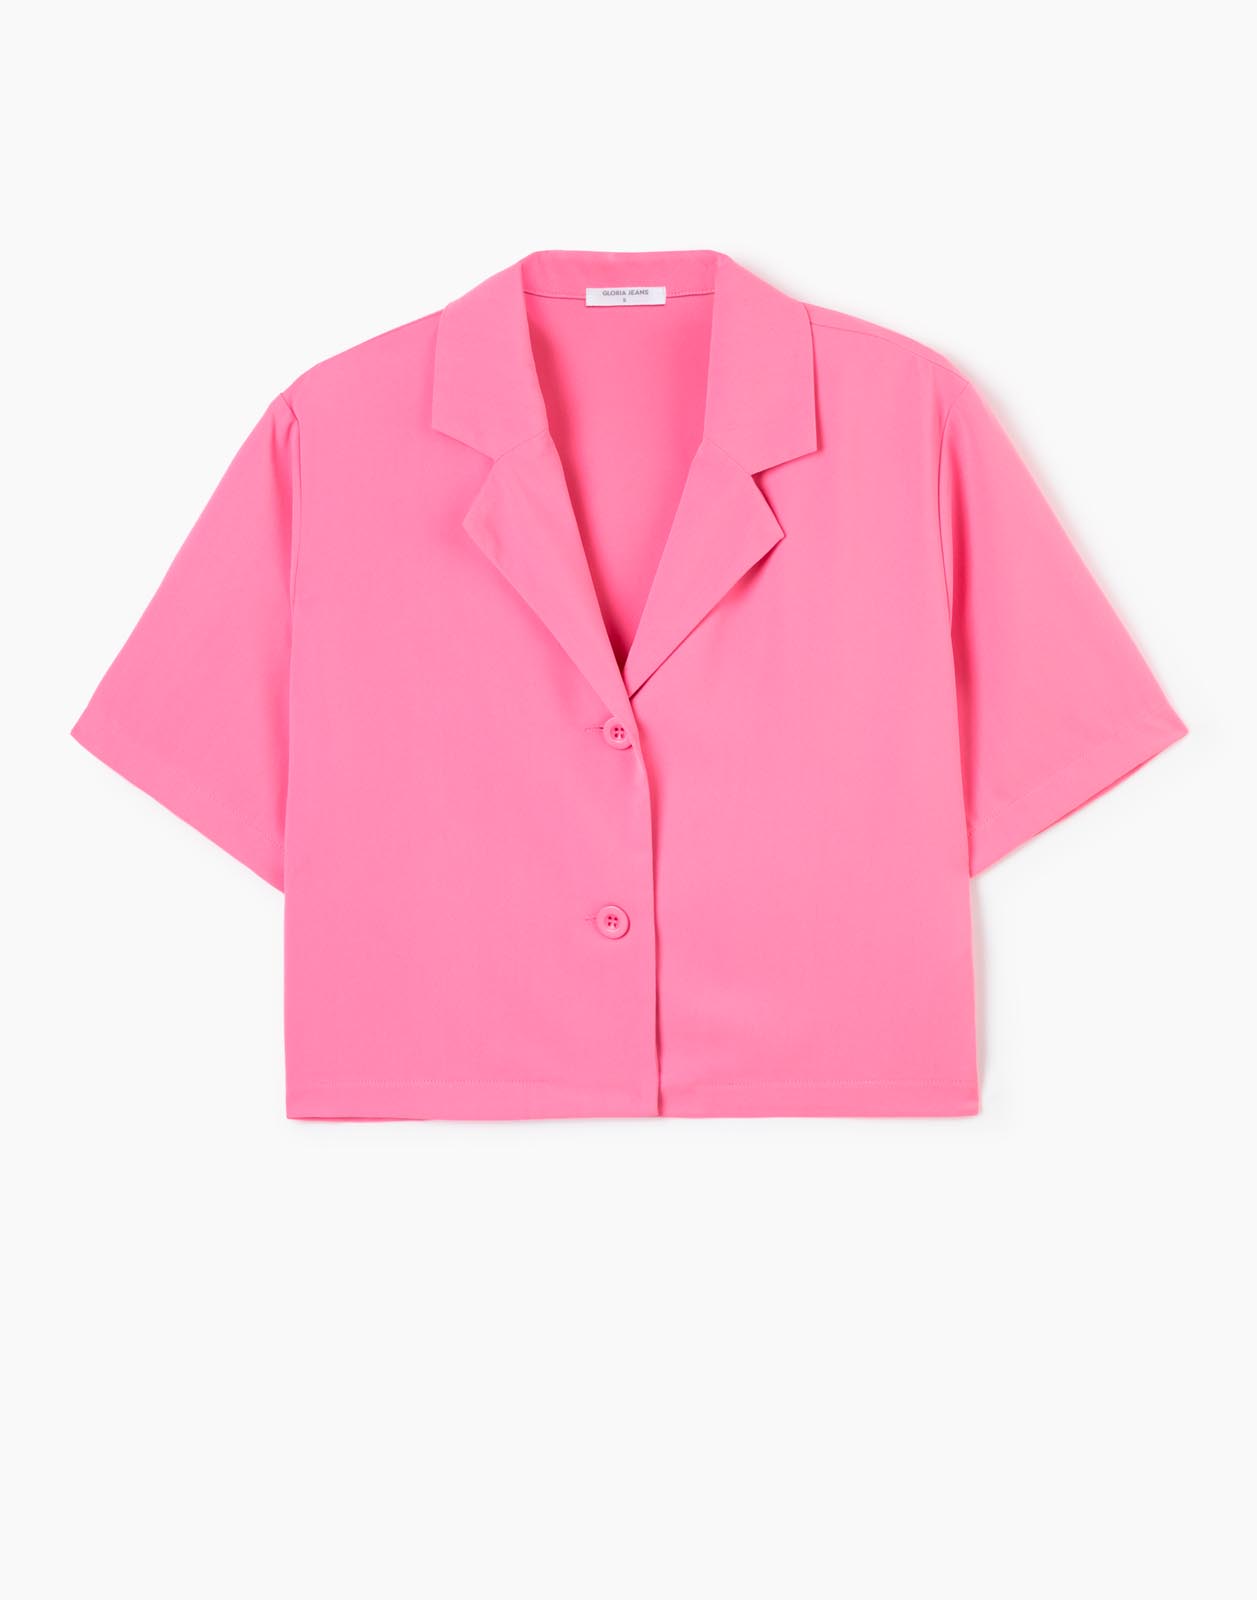 Рубашка женская Gloria Jeans GWT003015 розовая M